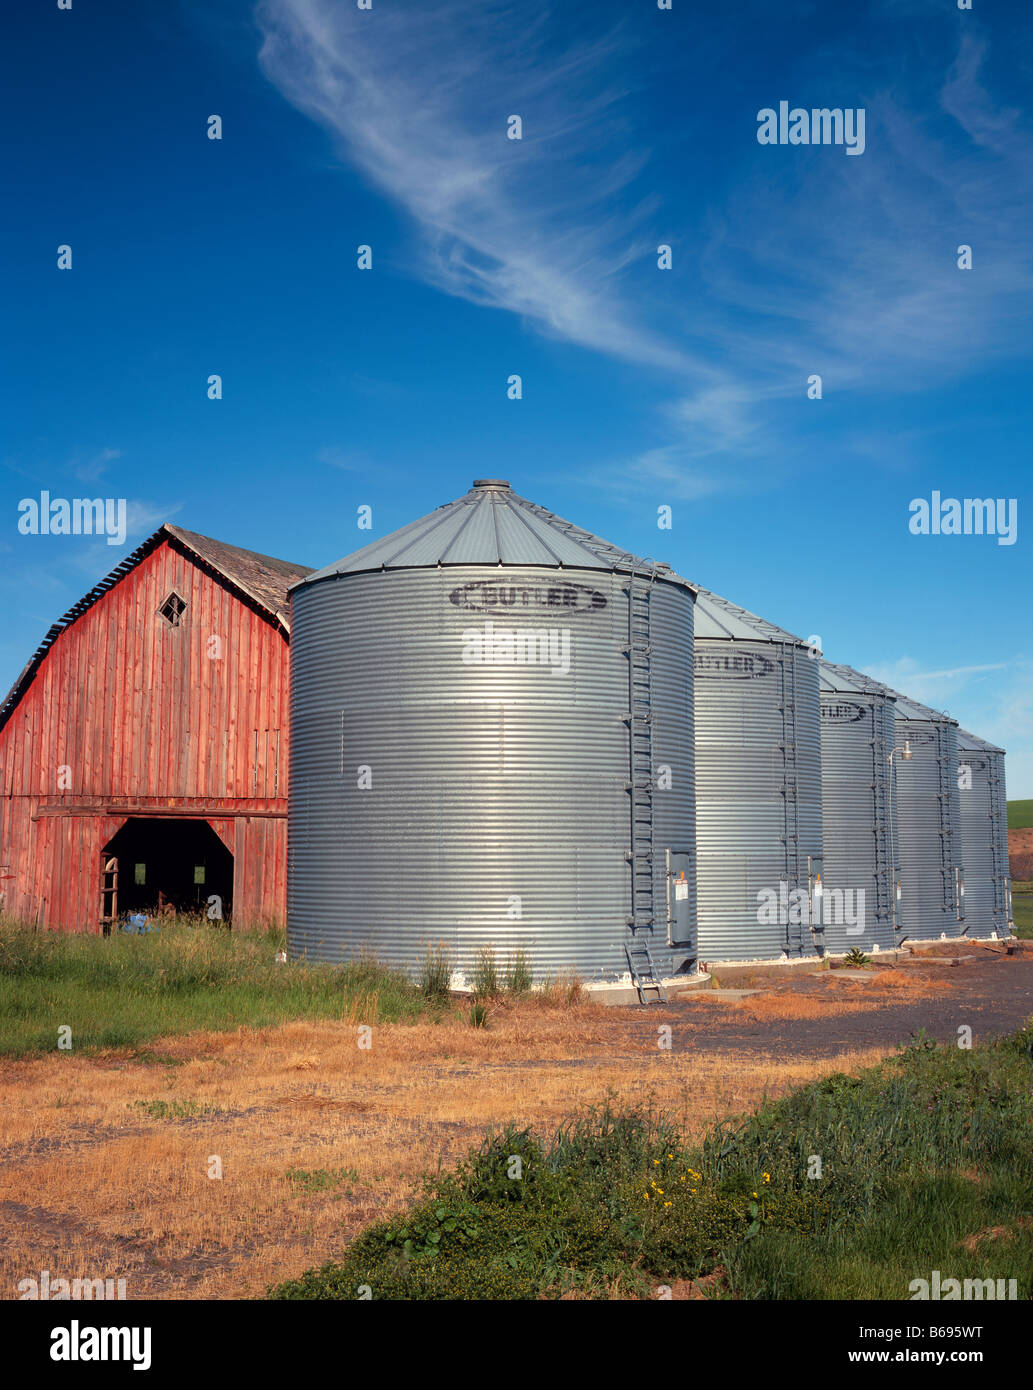 WASHINGTON - Barn and grain silos in a farm field in the Palouse area of Eastern Washington. Stock Photo